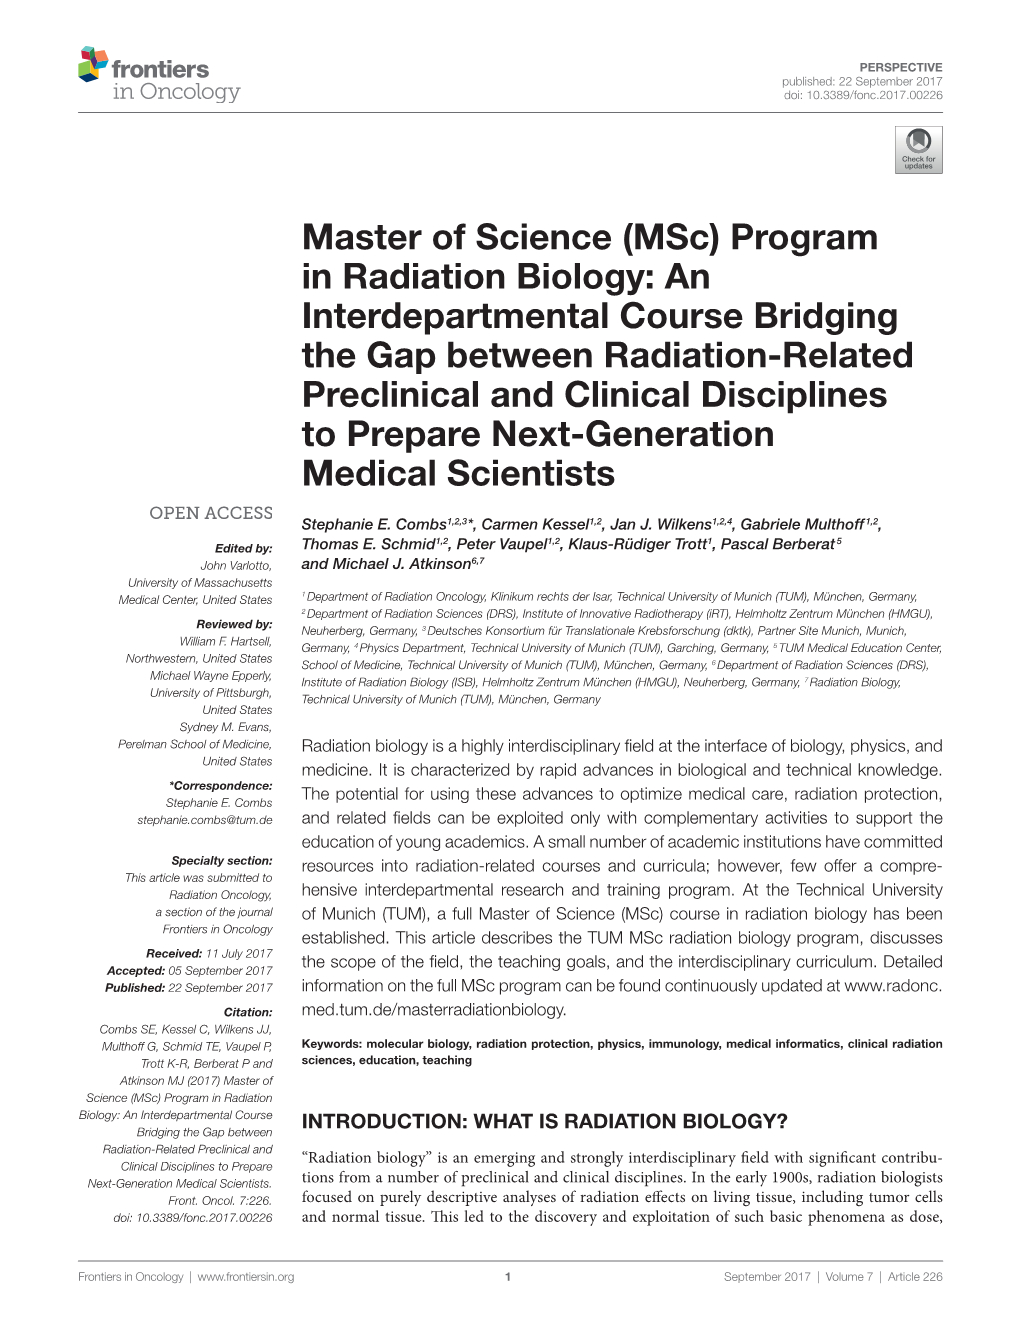 Master of Science (Msc) Program in Radiation Biology